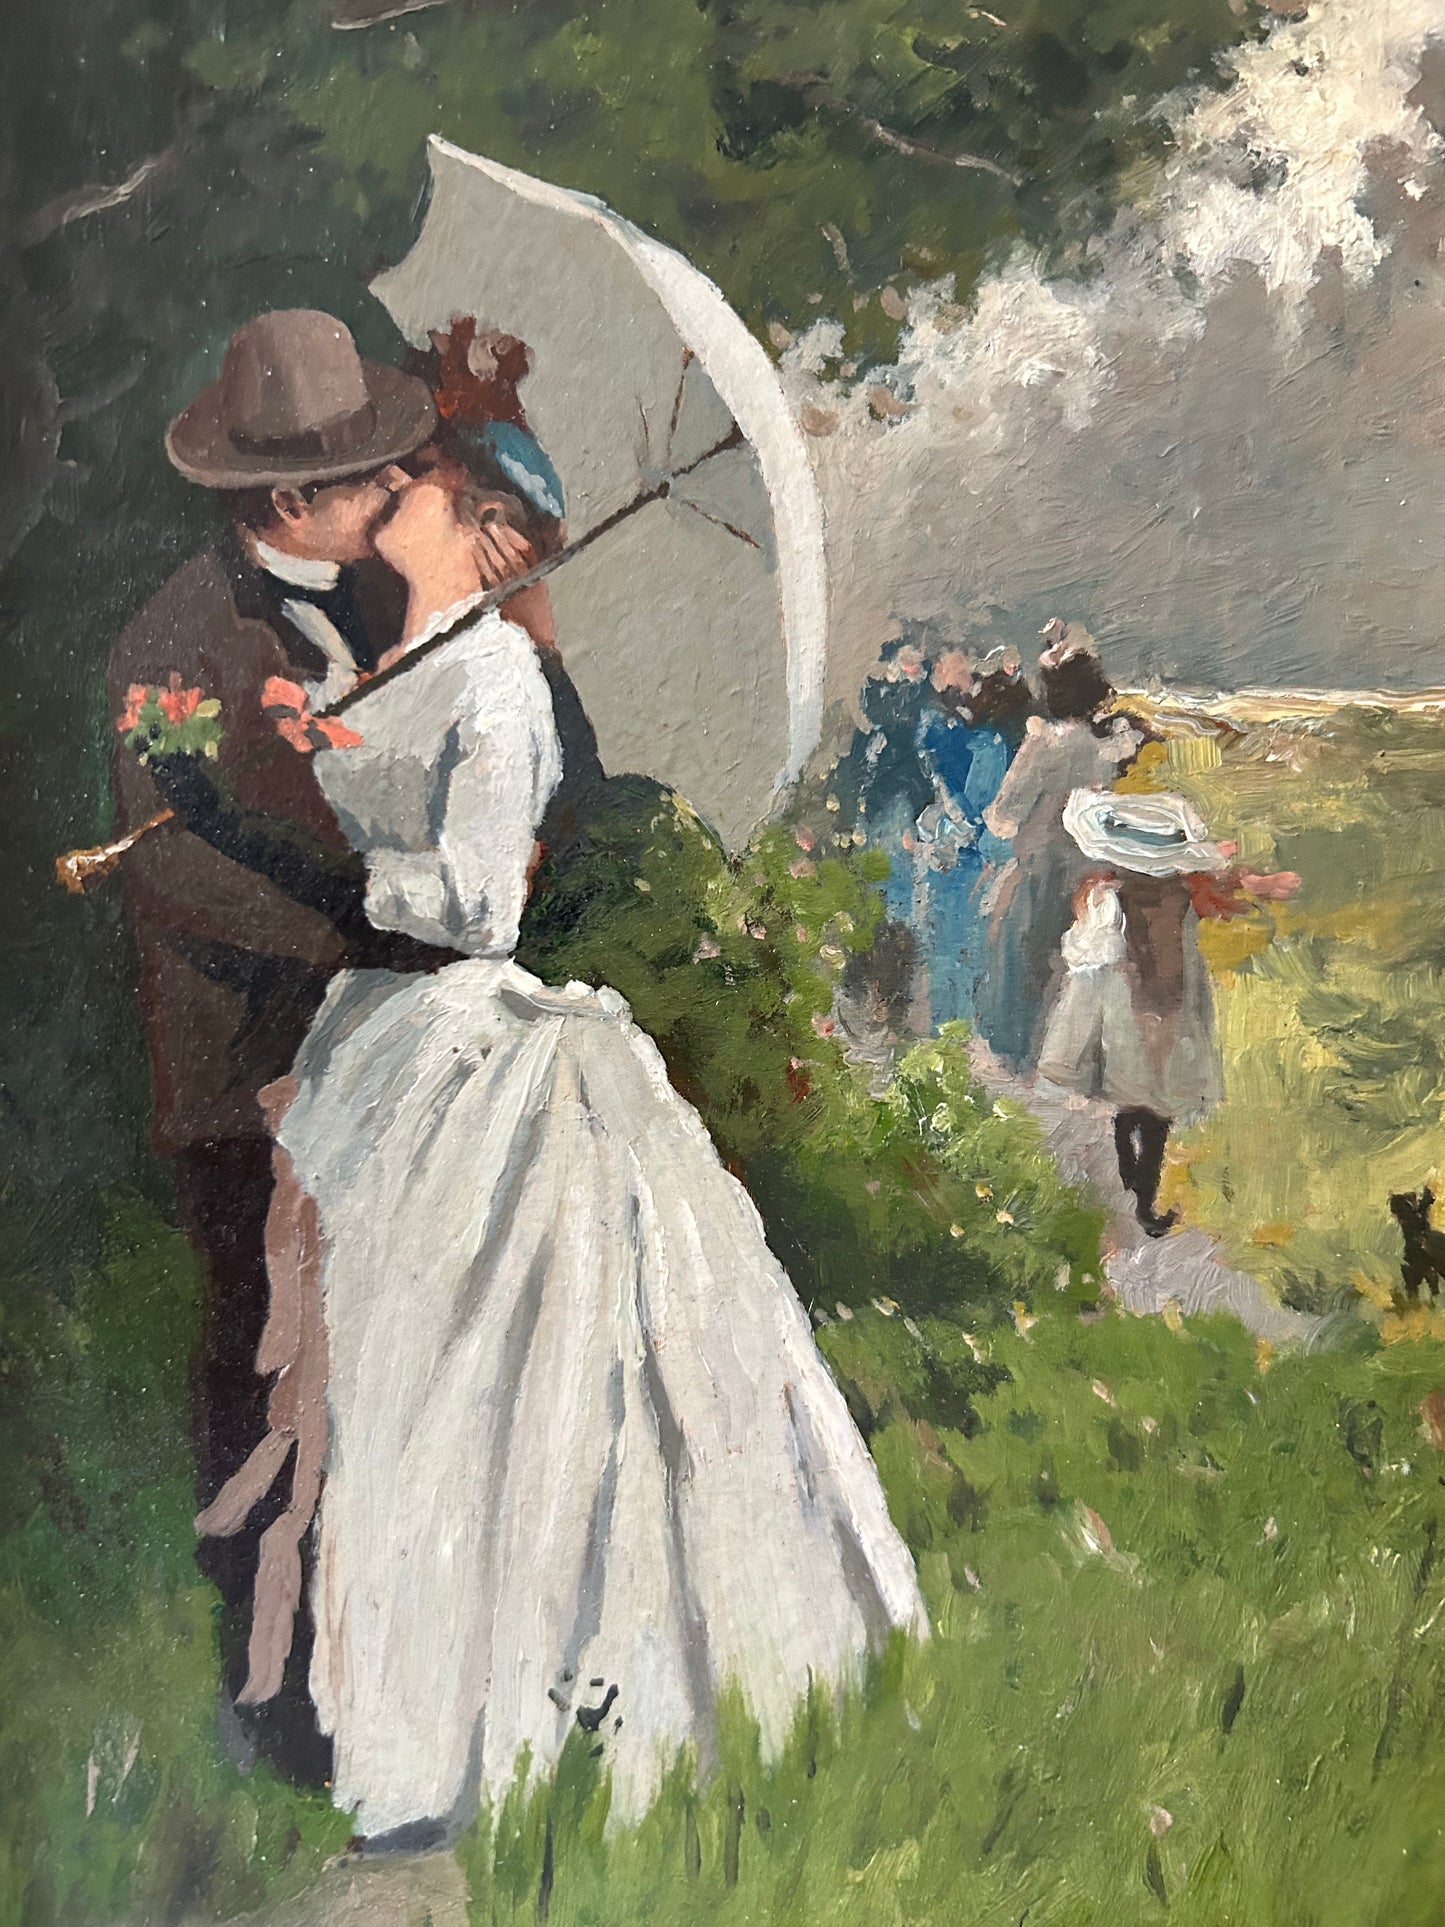 Romantic Original Antique Oil Painting on Board German artist Reinicke c. 1890